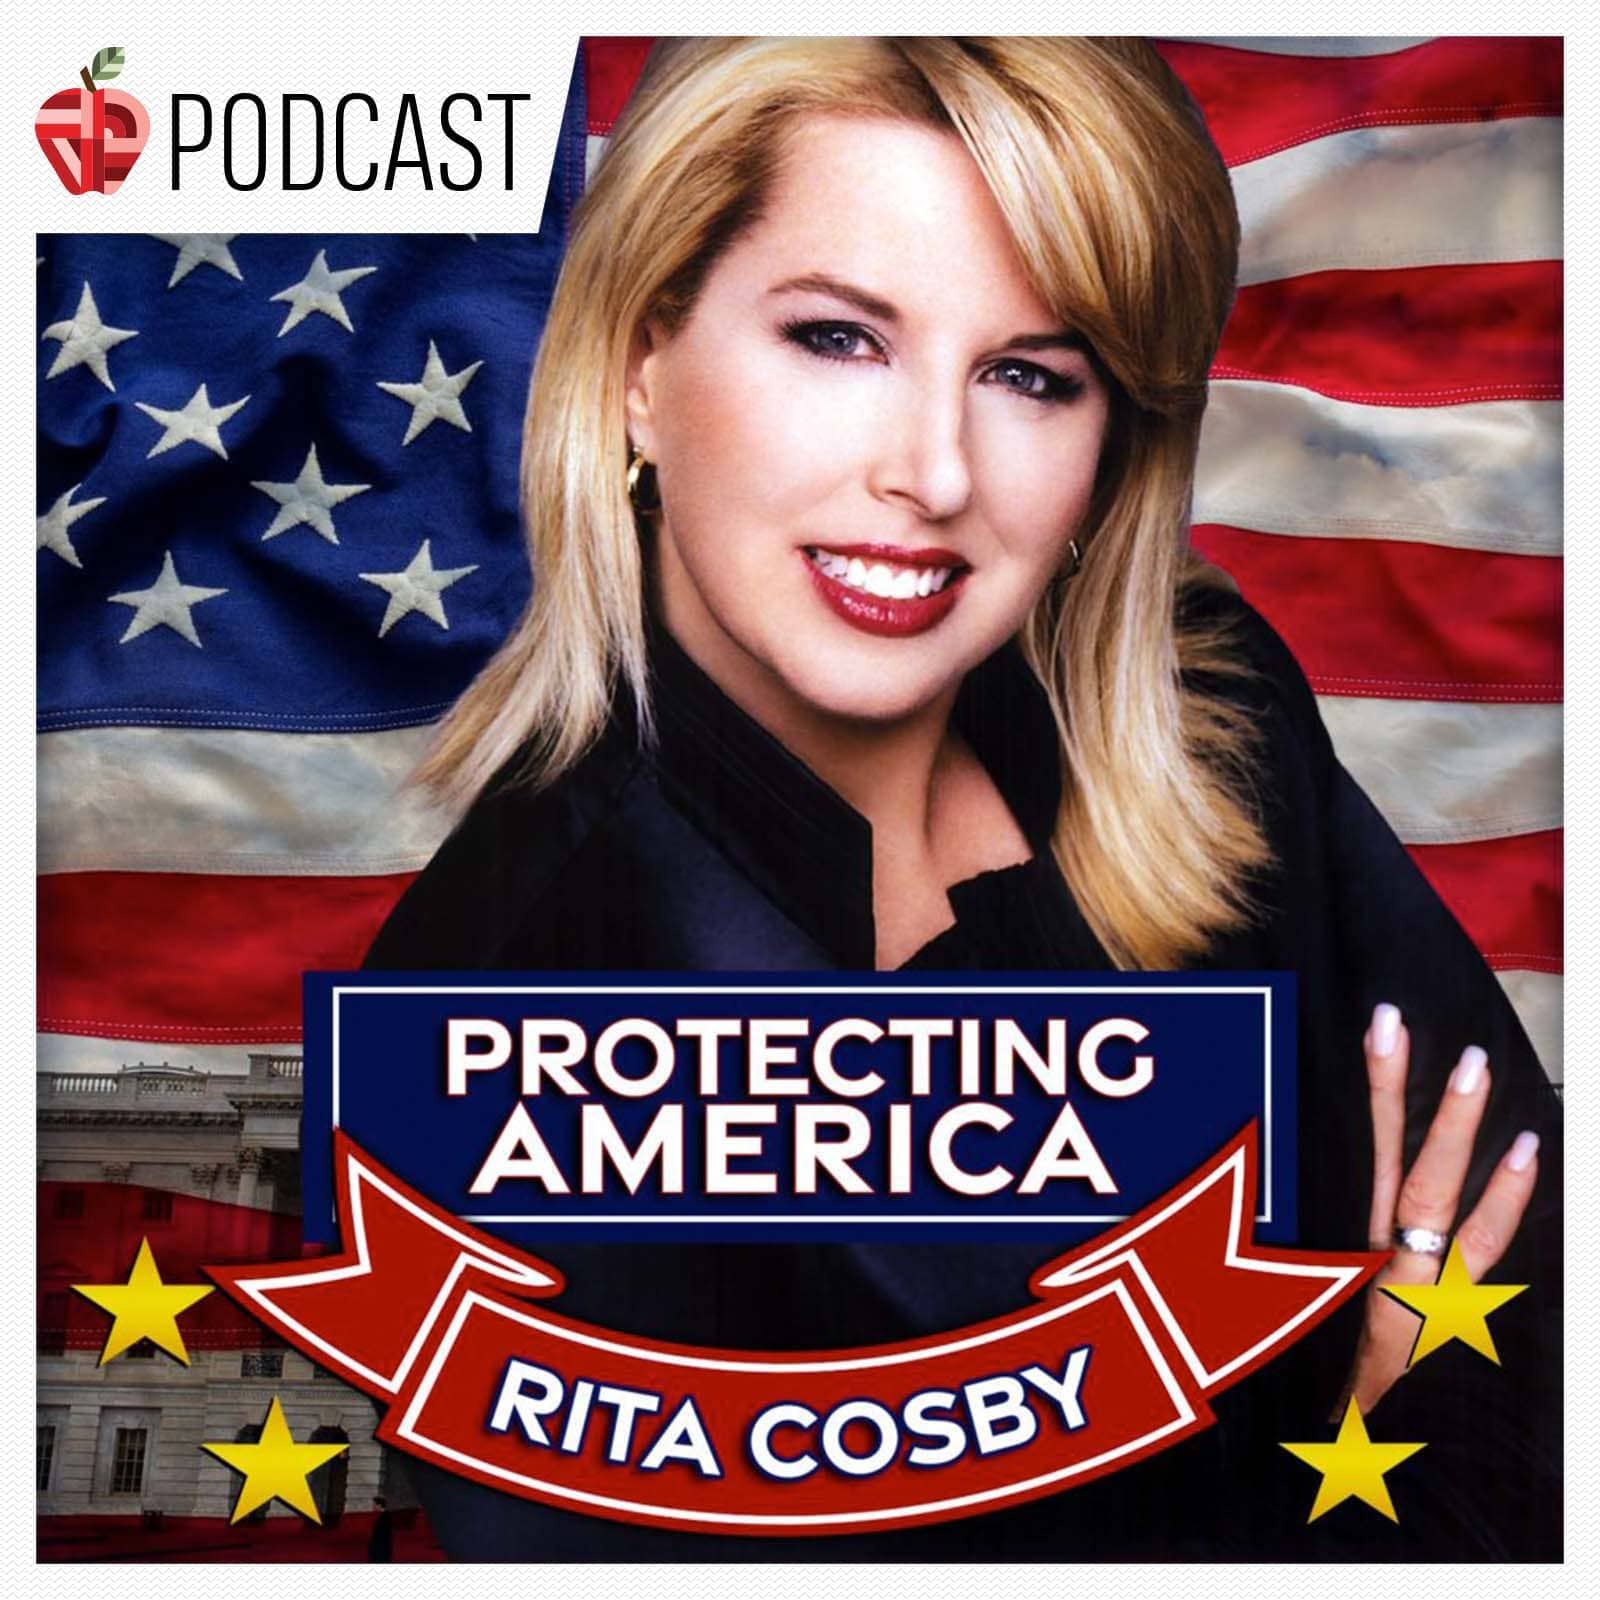 rita-cosby-protecting-america-correct-podcast-new-logo926863